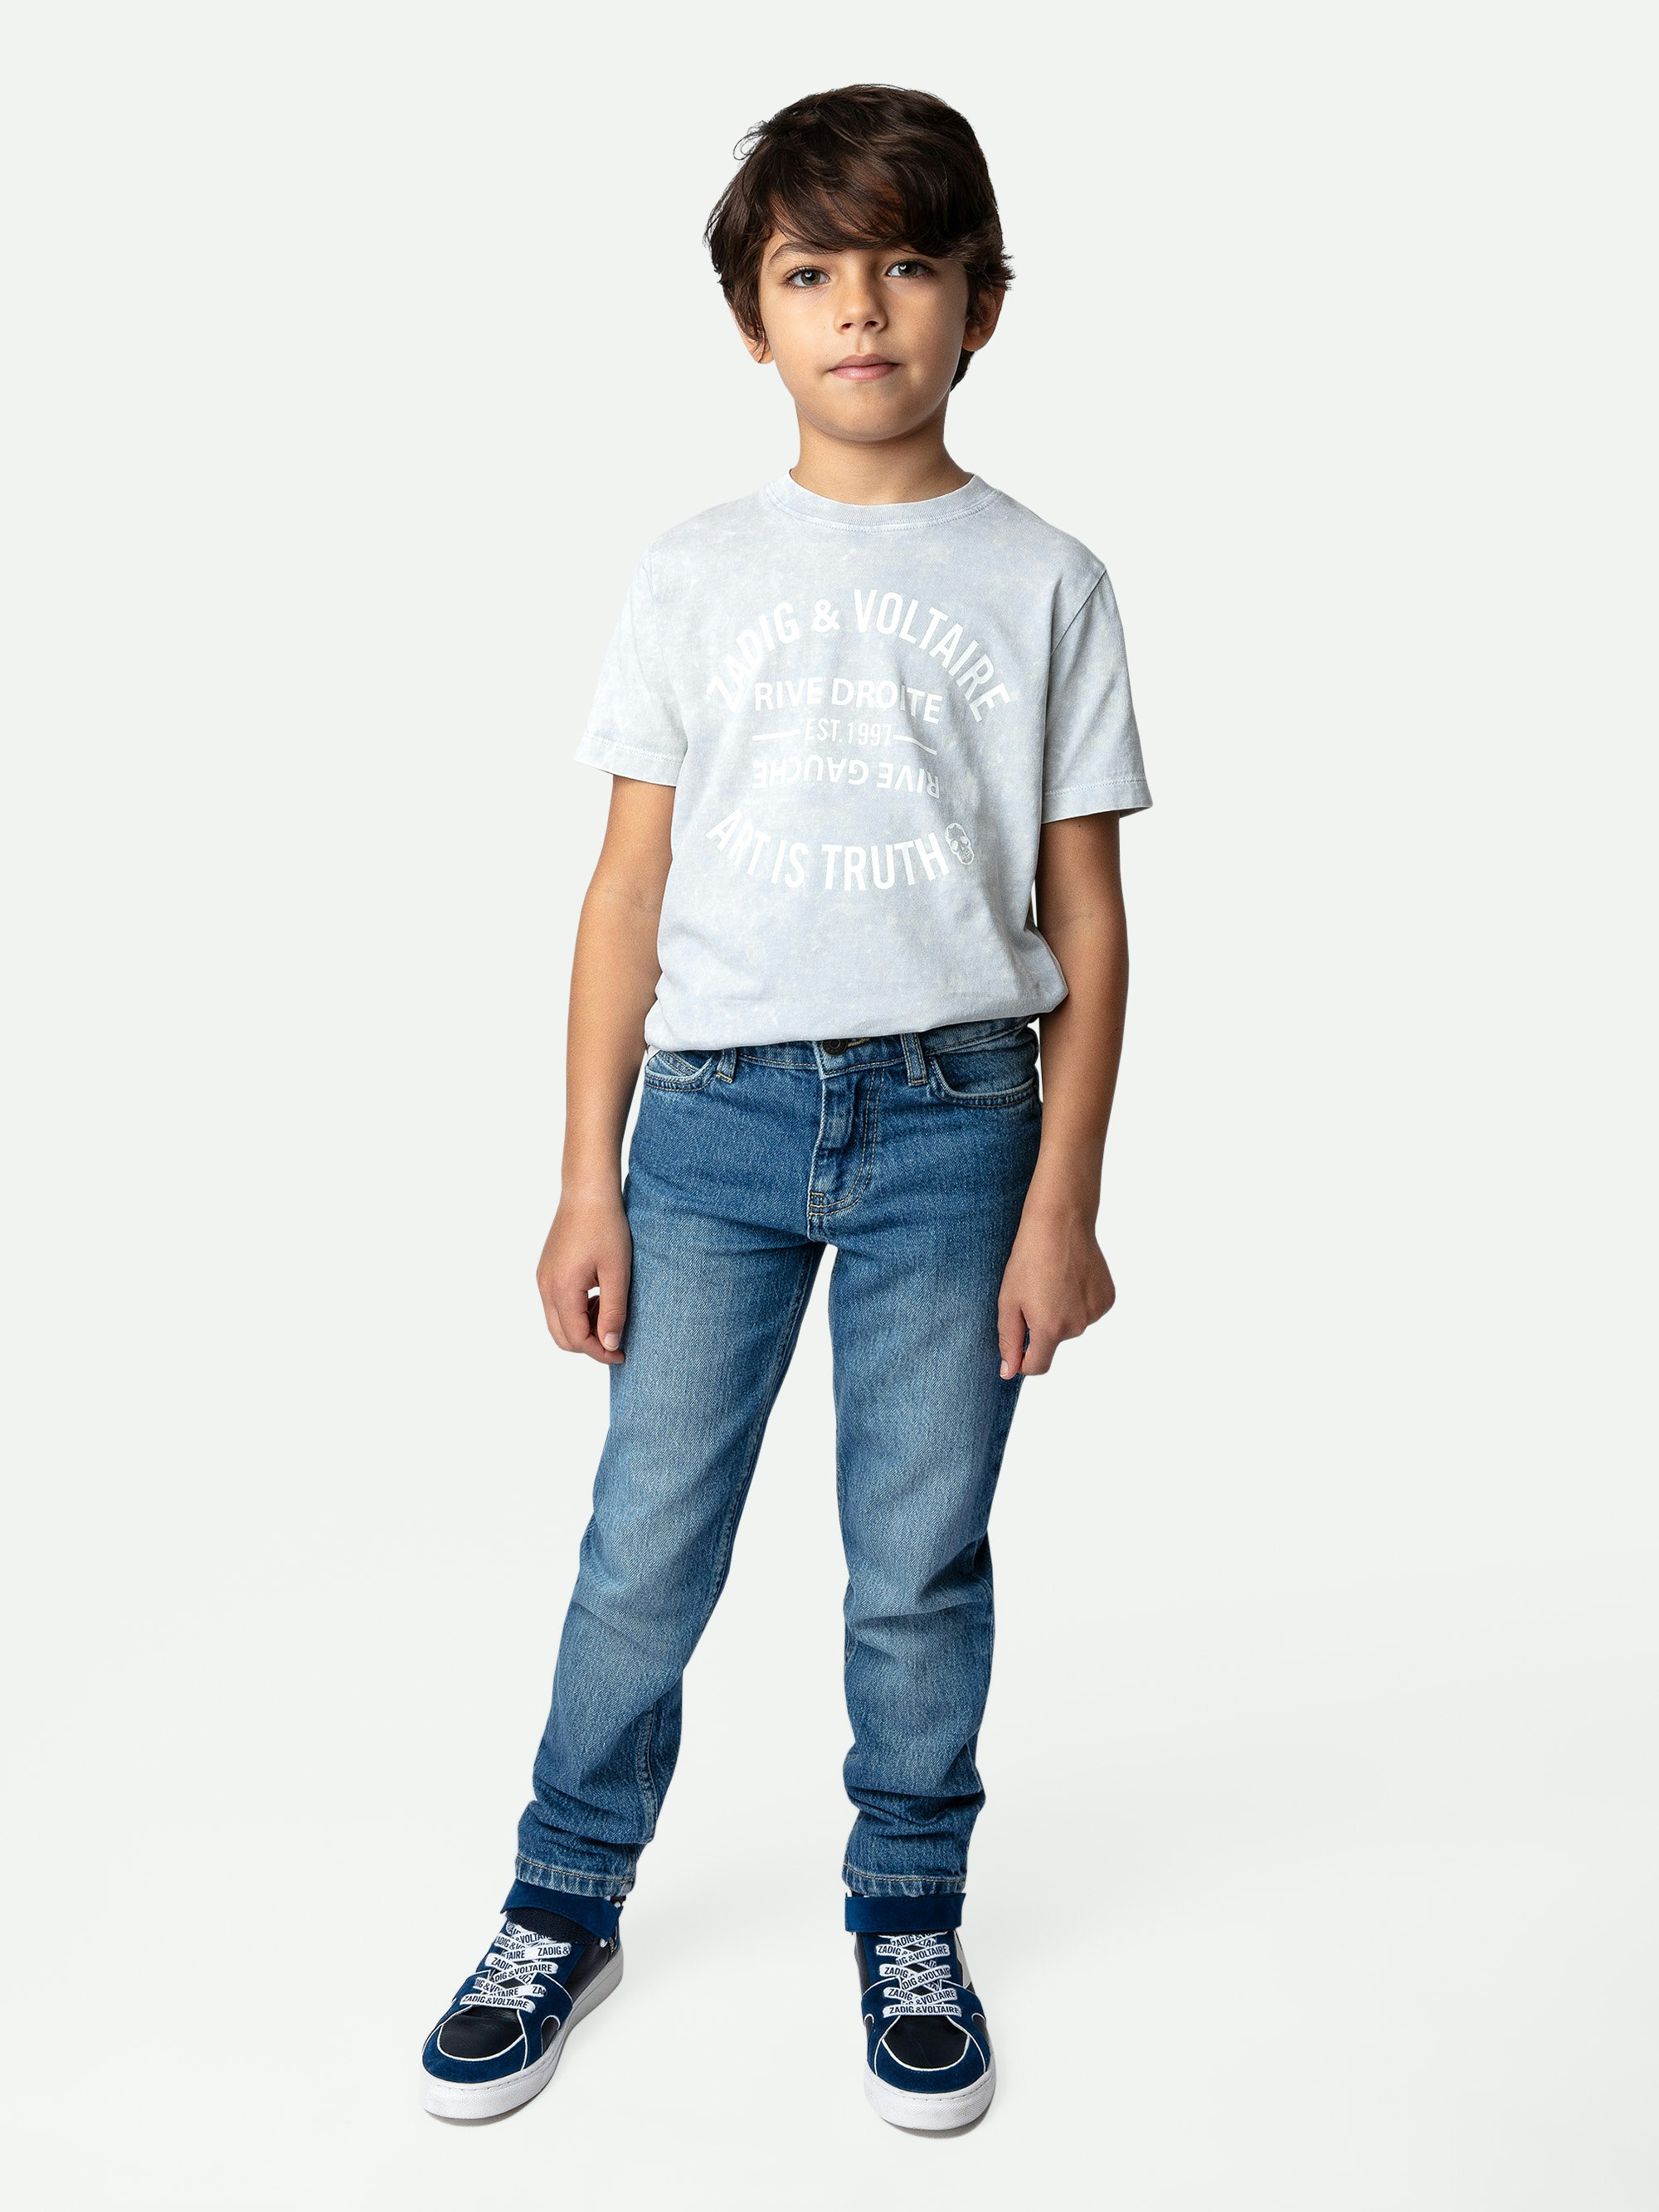 T-shirt Kita Garçon - T-shirt garçon à manches courtes en jersey coton gris effet neige orné du blason.